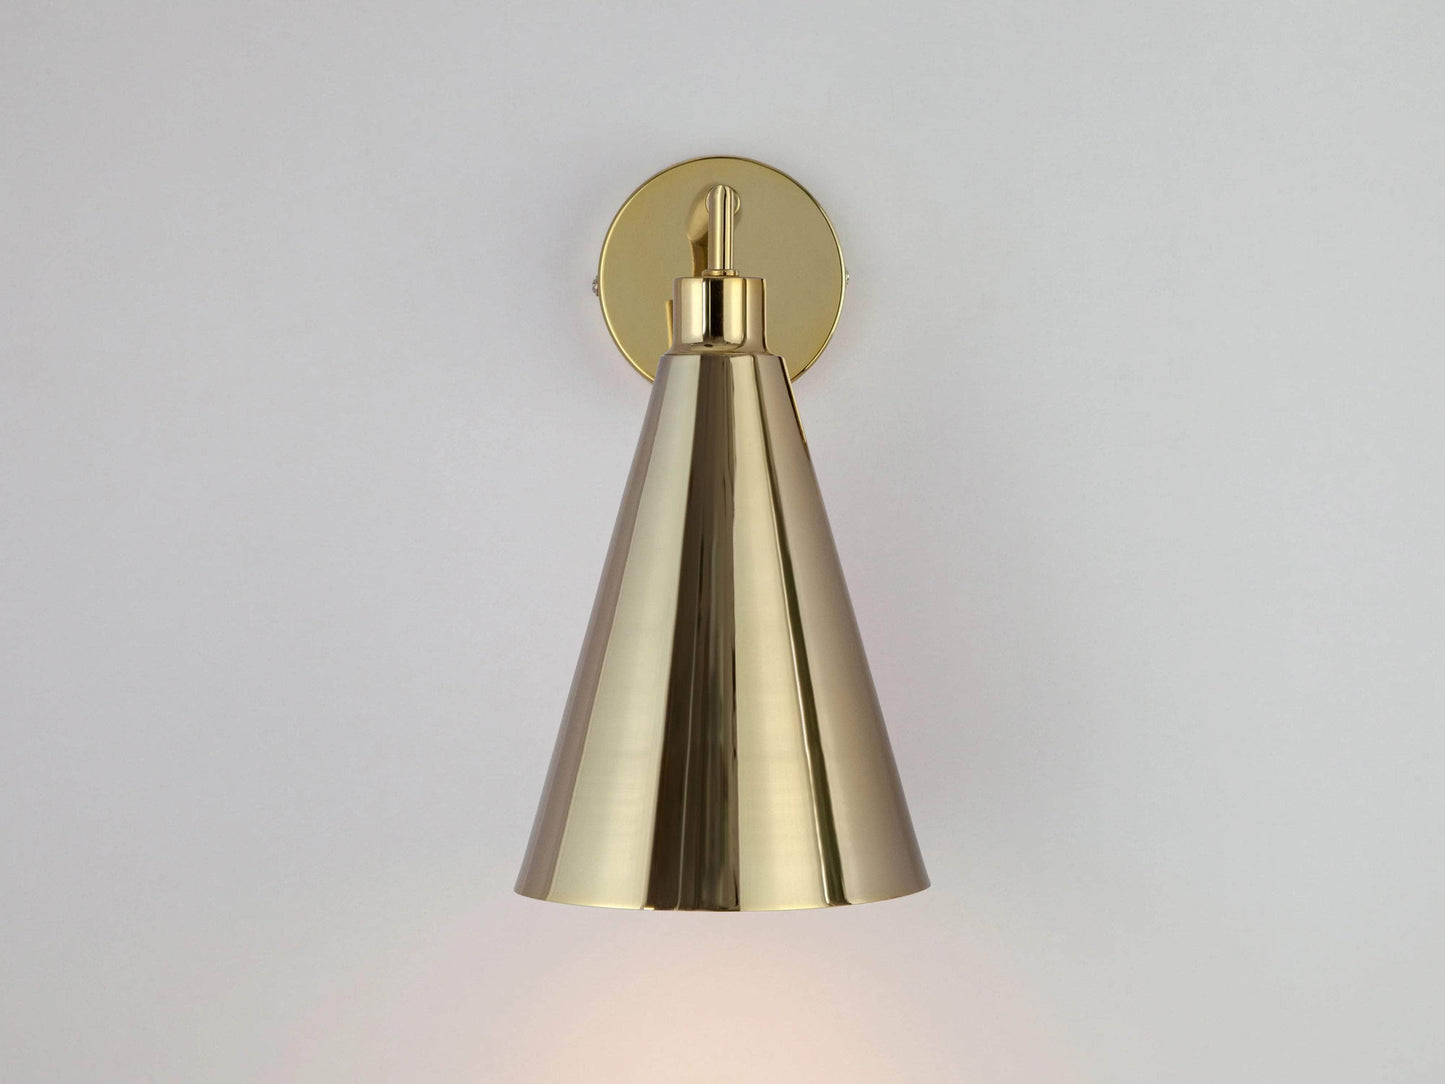 Brass cone shade wall light